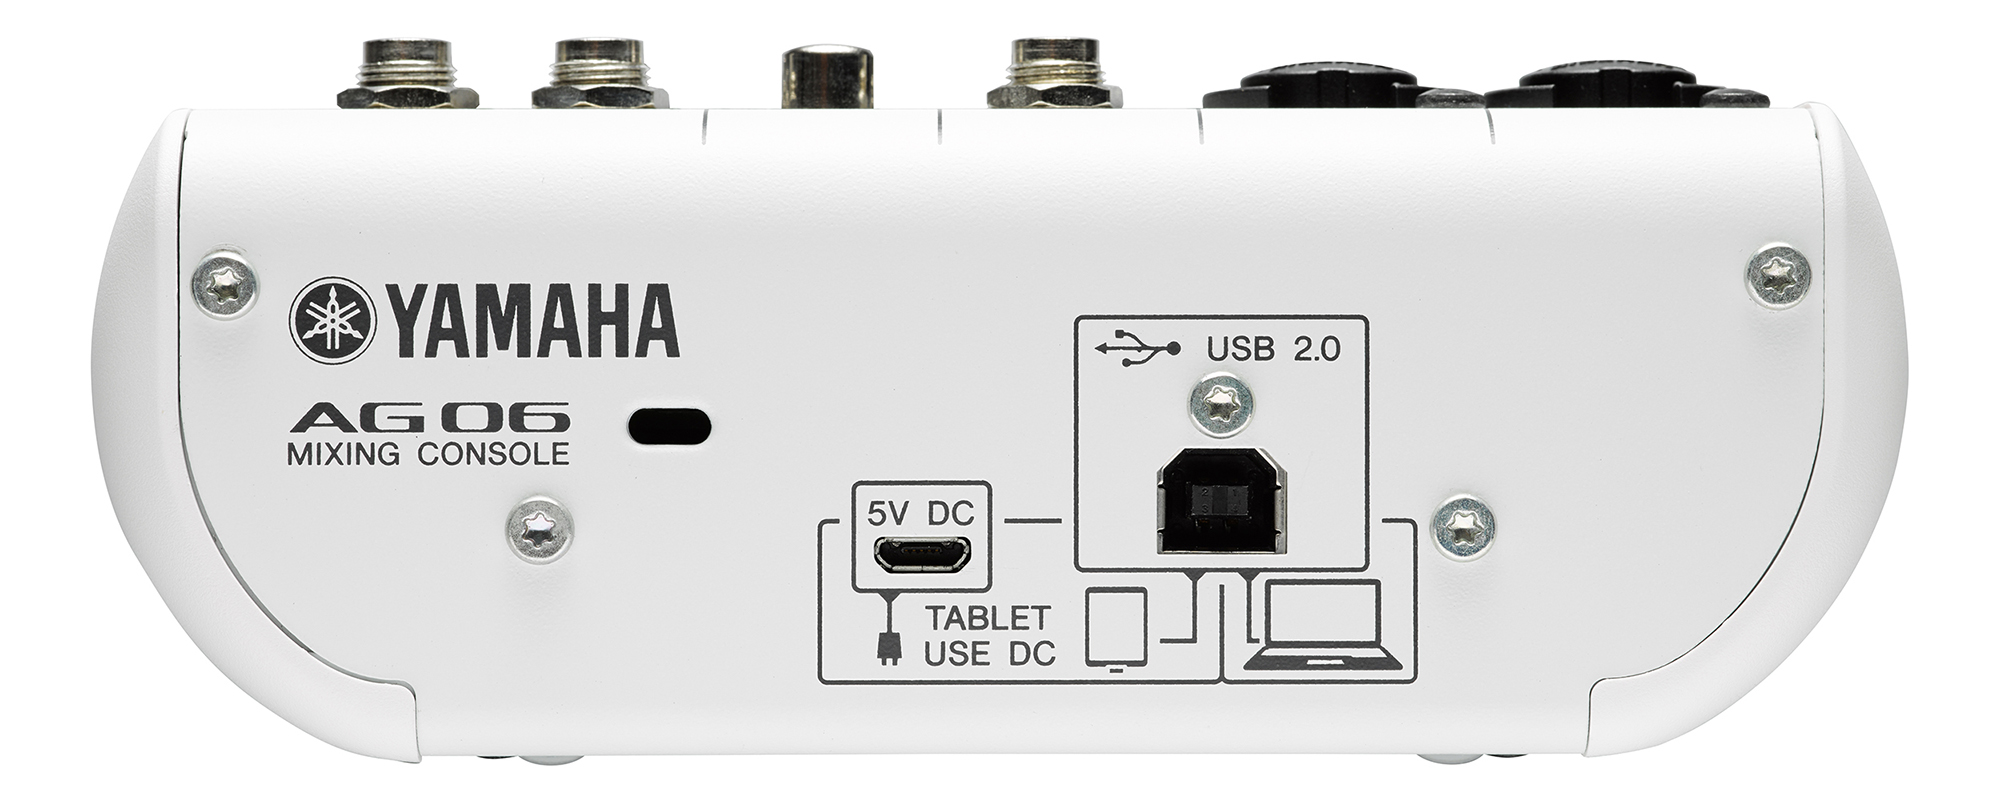 Yamaha Ag Series Mixer And Usb Audio Interface Routenote Blog